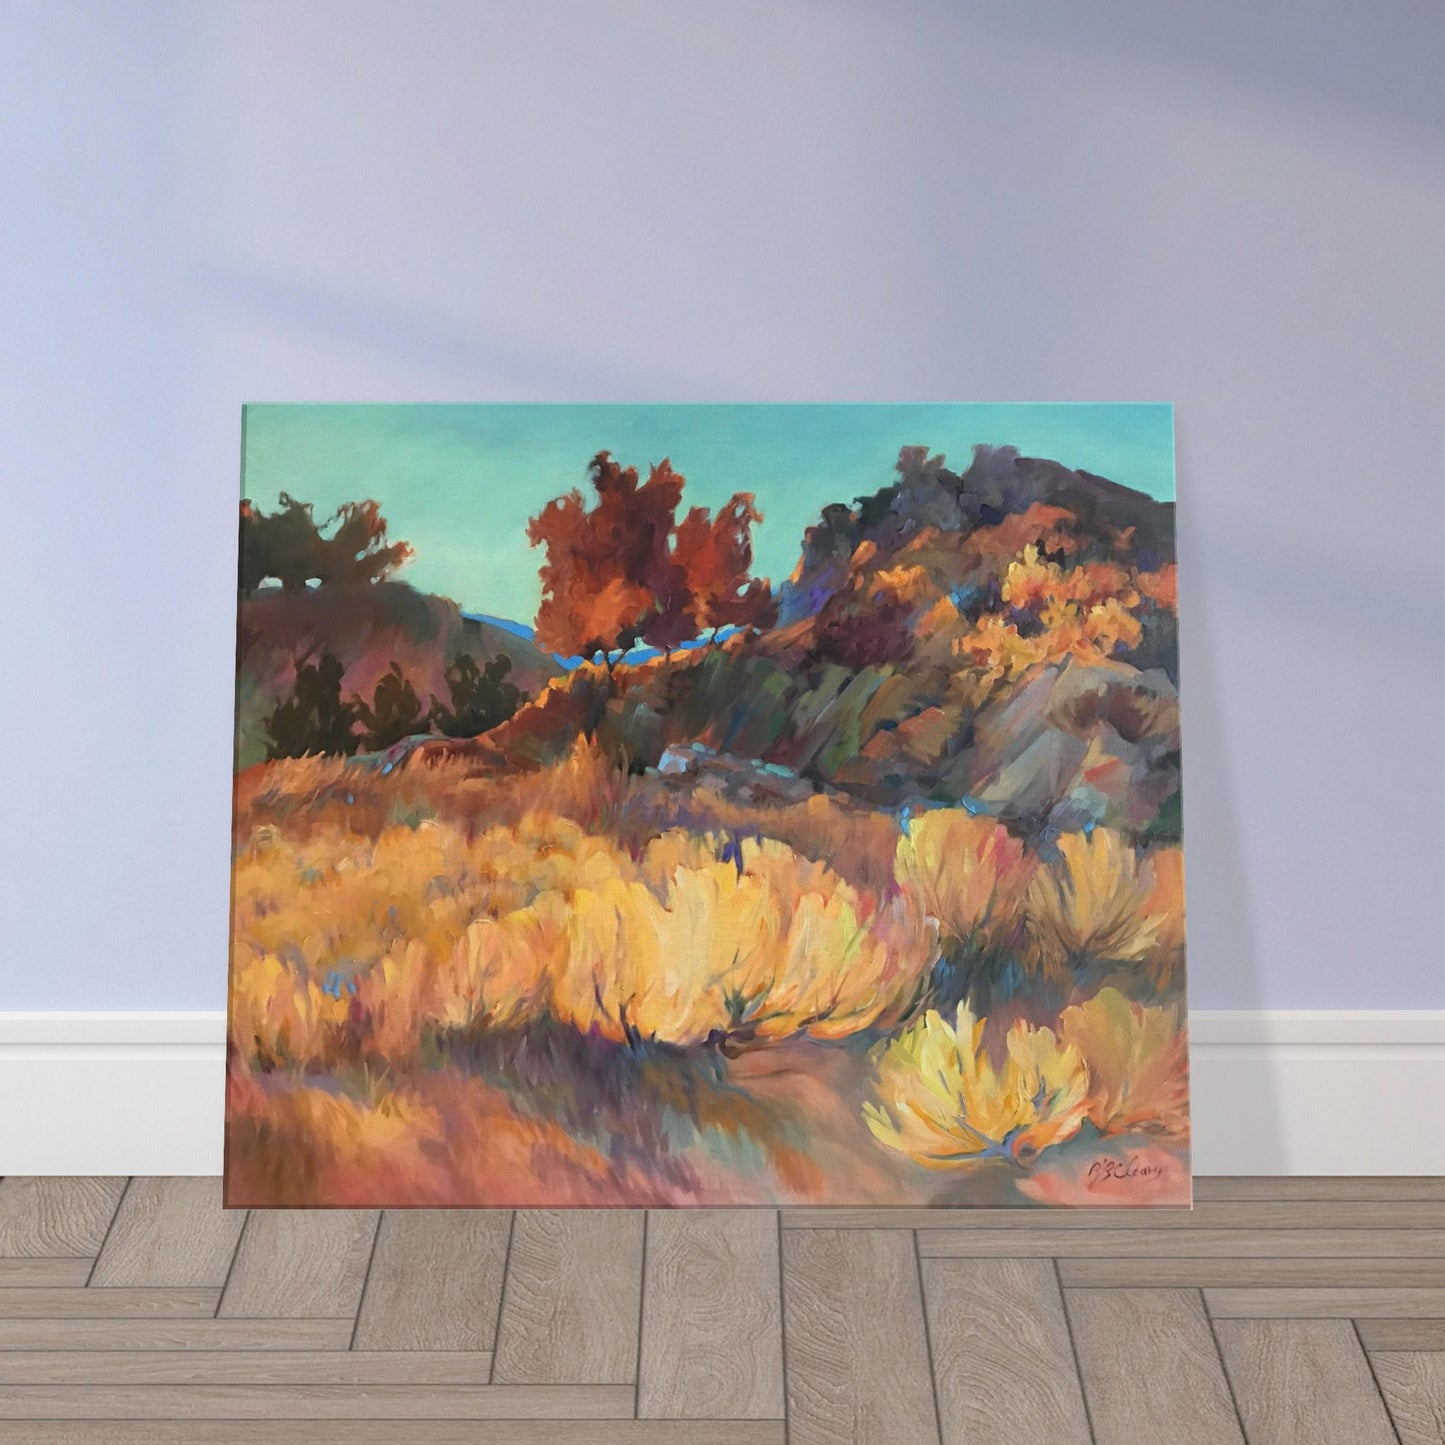 "Rock Ridge" Art Print 20x24 inch on Canvas Barbara Cleary Designs